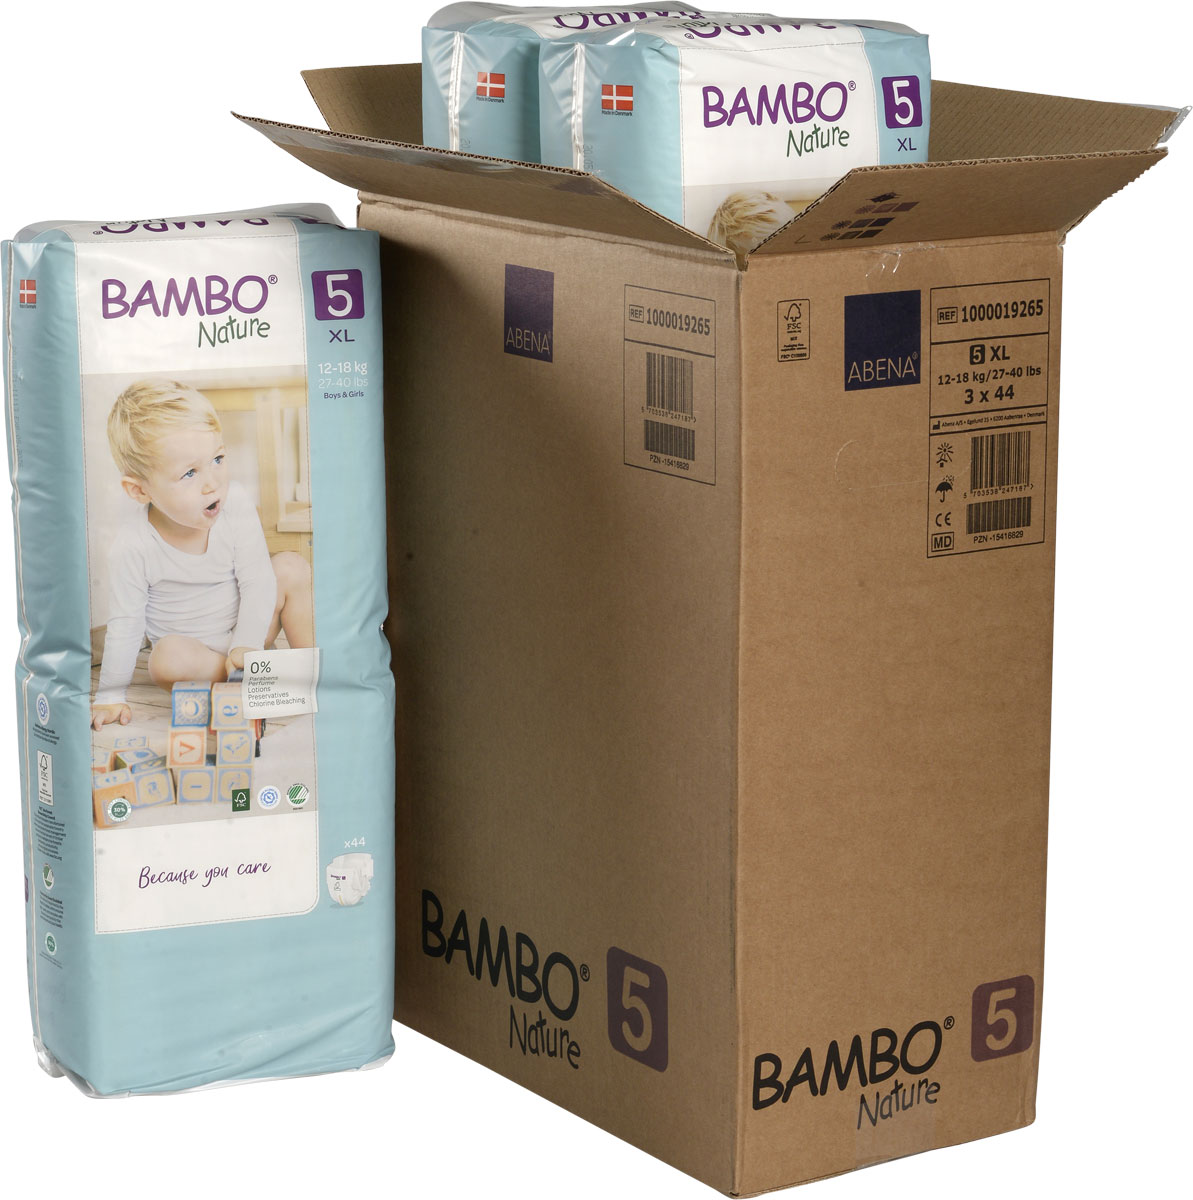 Bambo NATURE - Babywindeln Gr. 5 JUNIOR [XL] 12-18kg - 132 Stück BIGPack